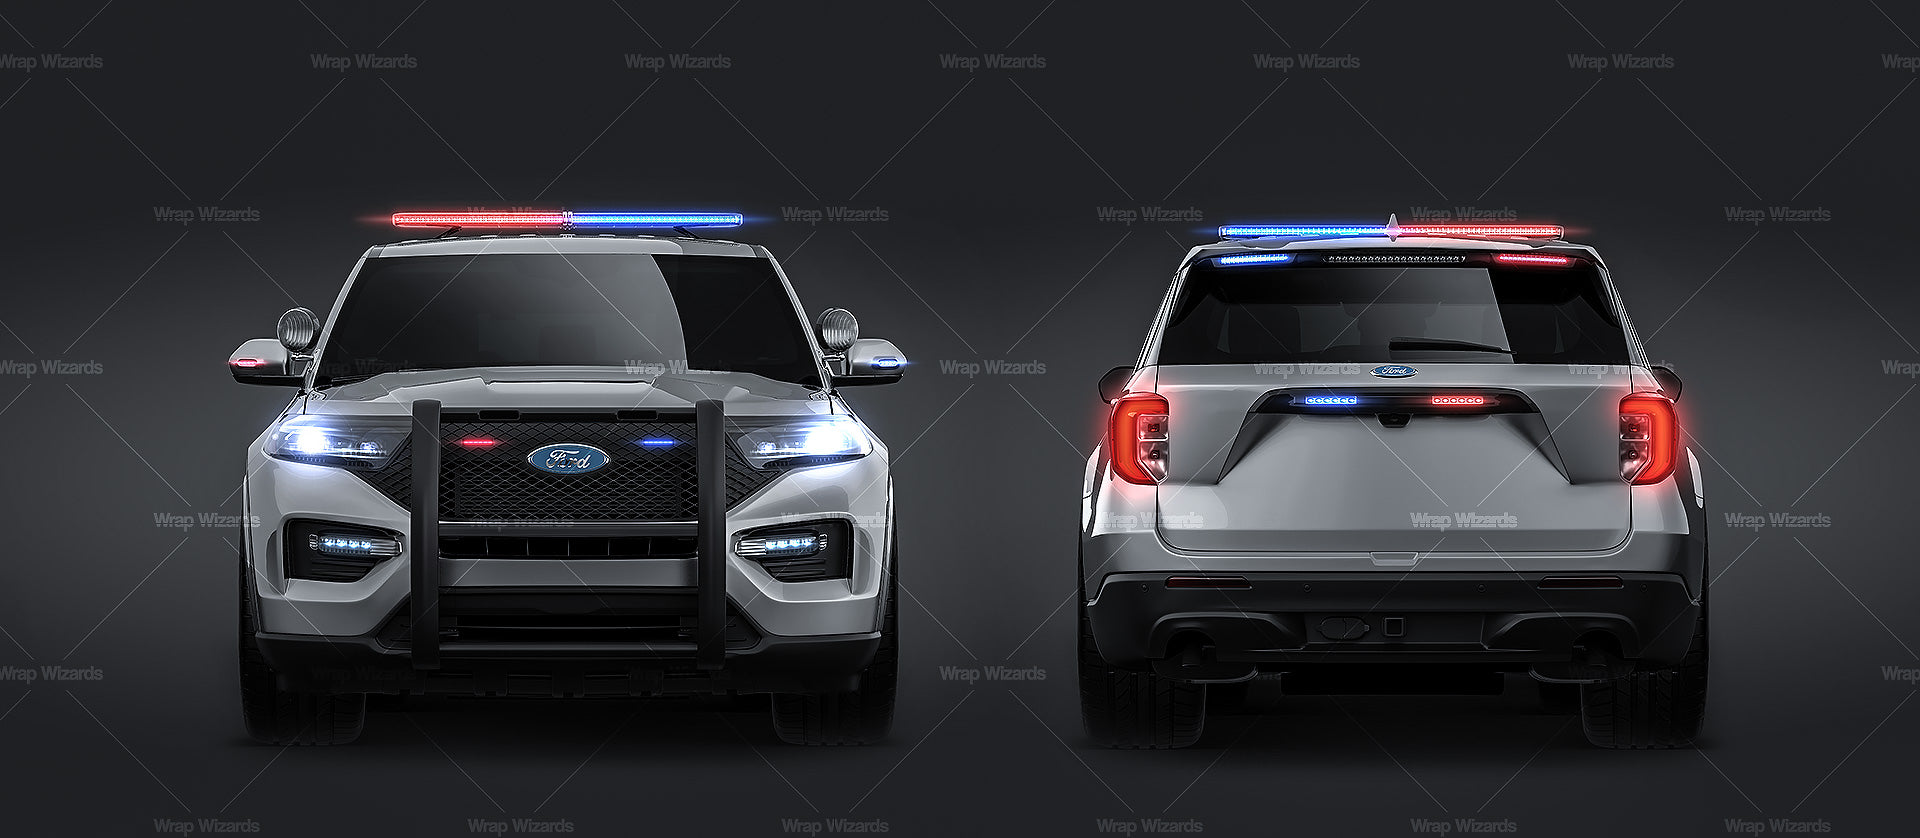 Ford Explorer 2020 Police Interceptor - Car Mockup